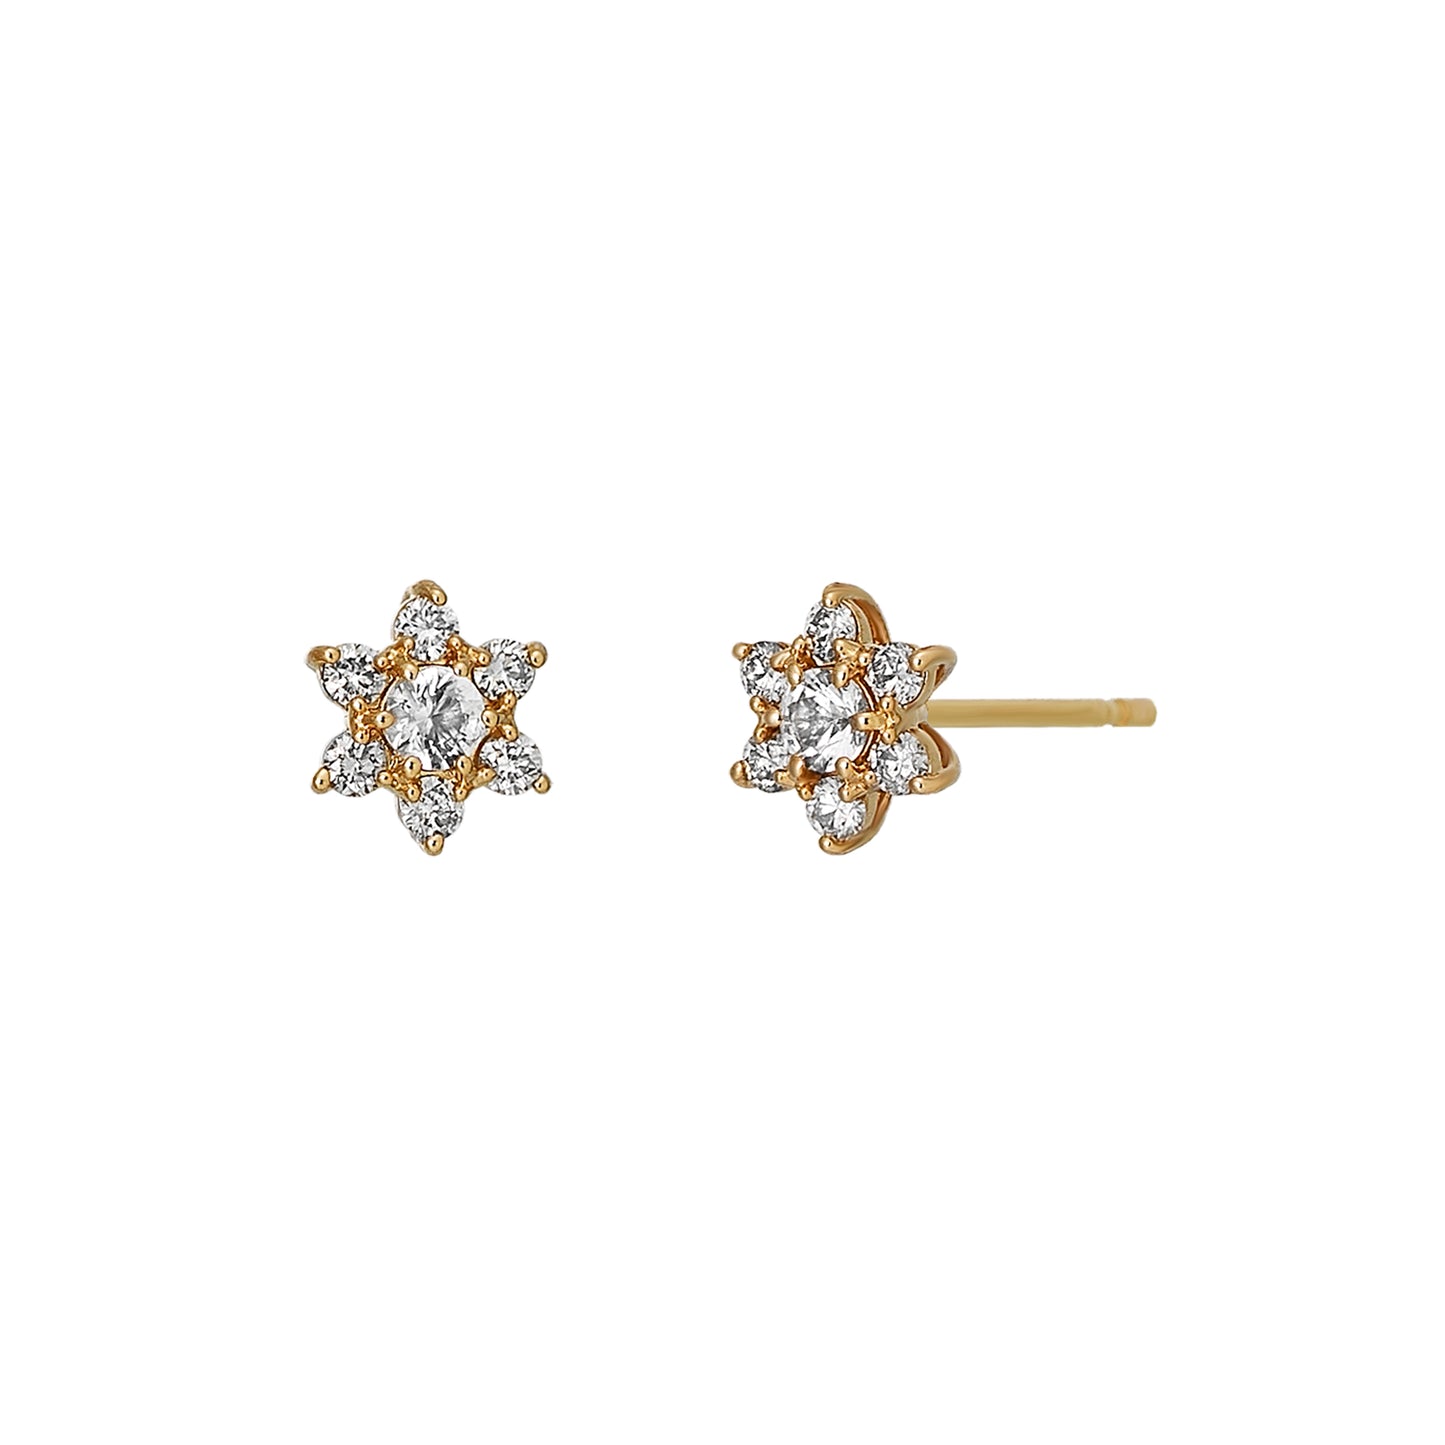 10K Yellow Gold Diamond Lumiere Mini Earrings - Product Image